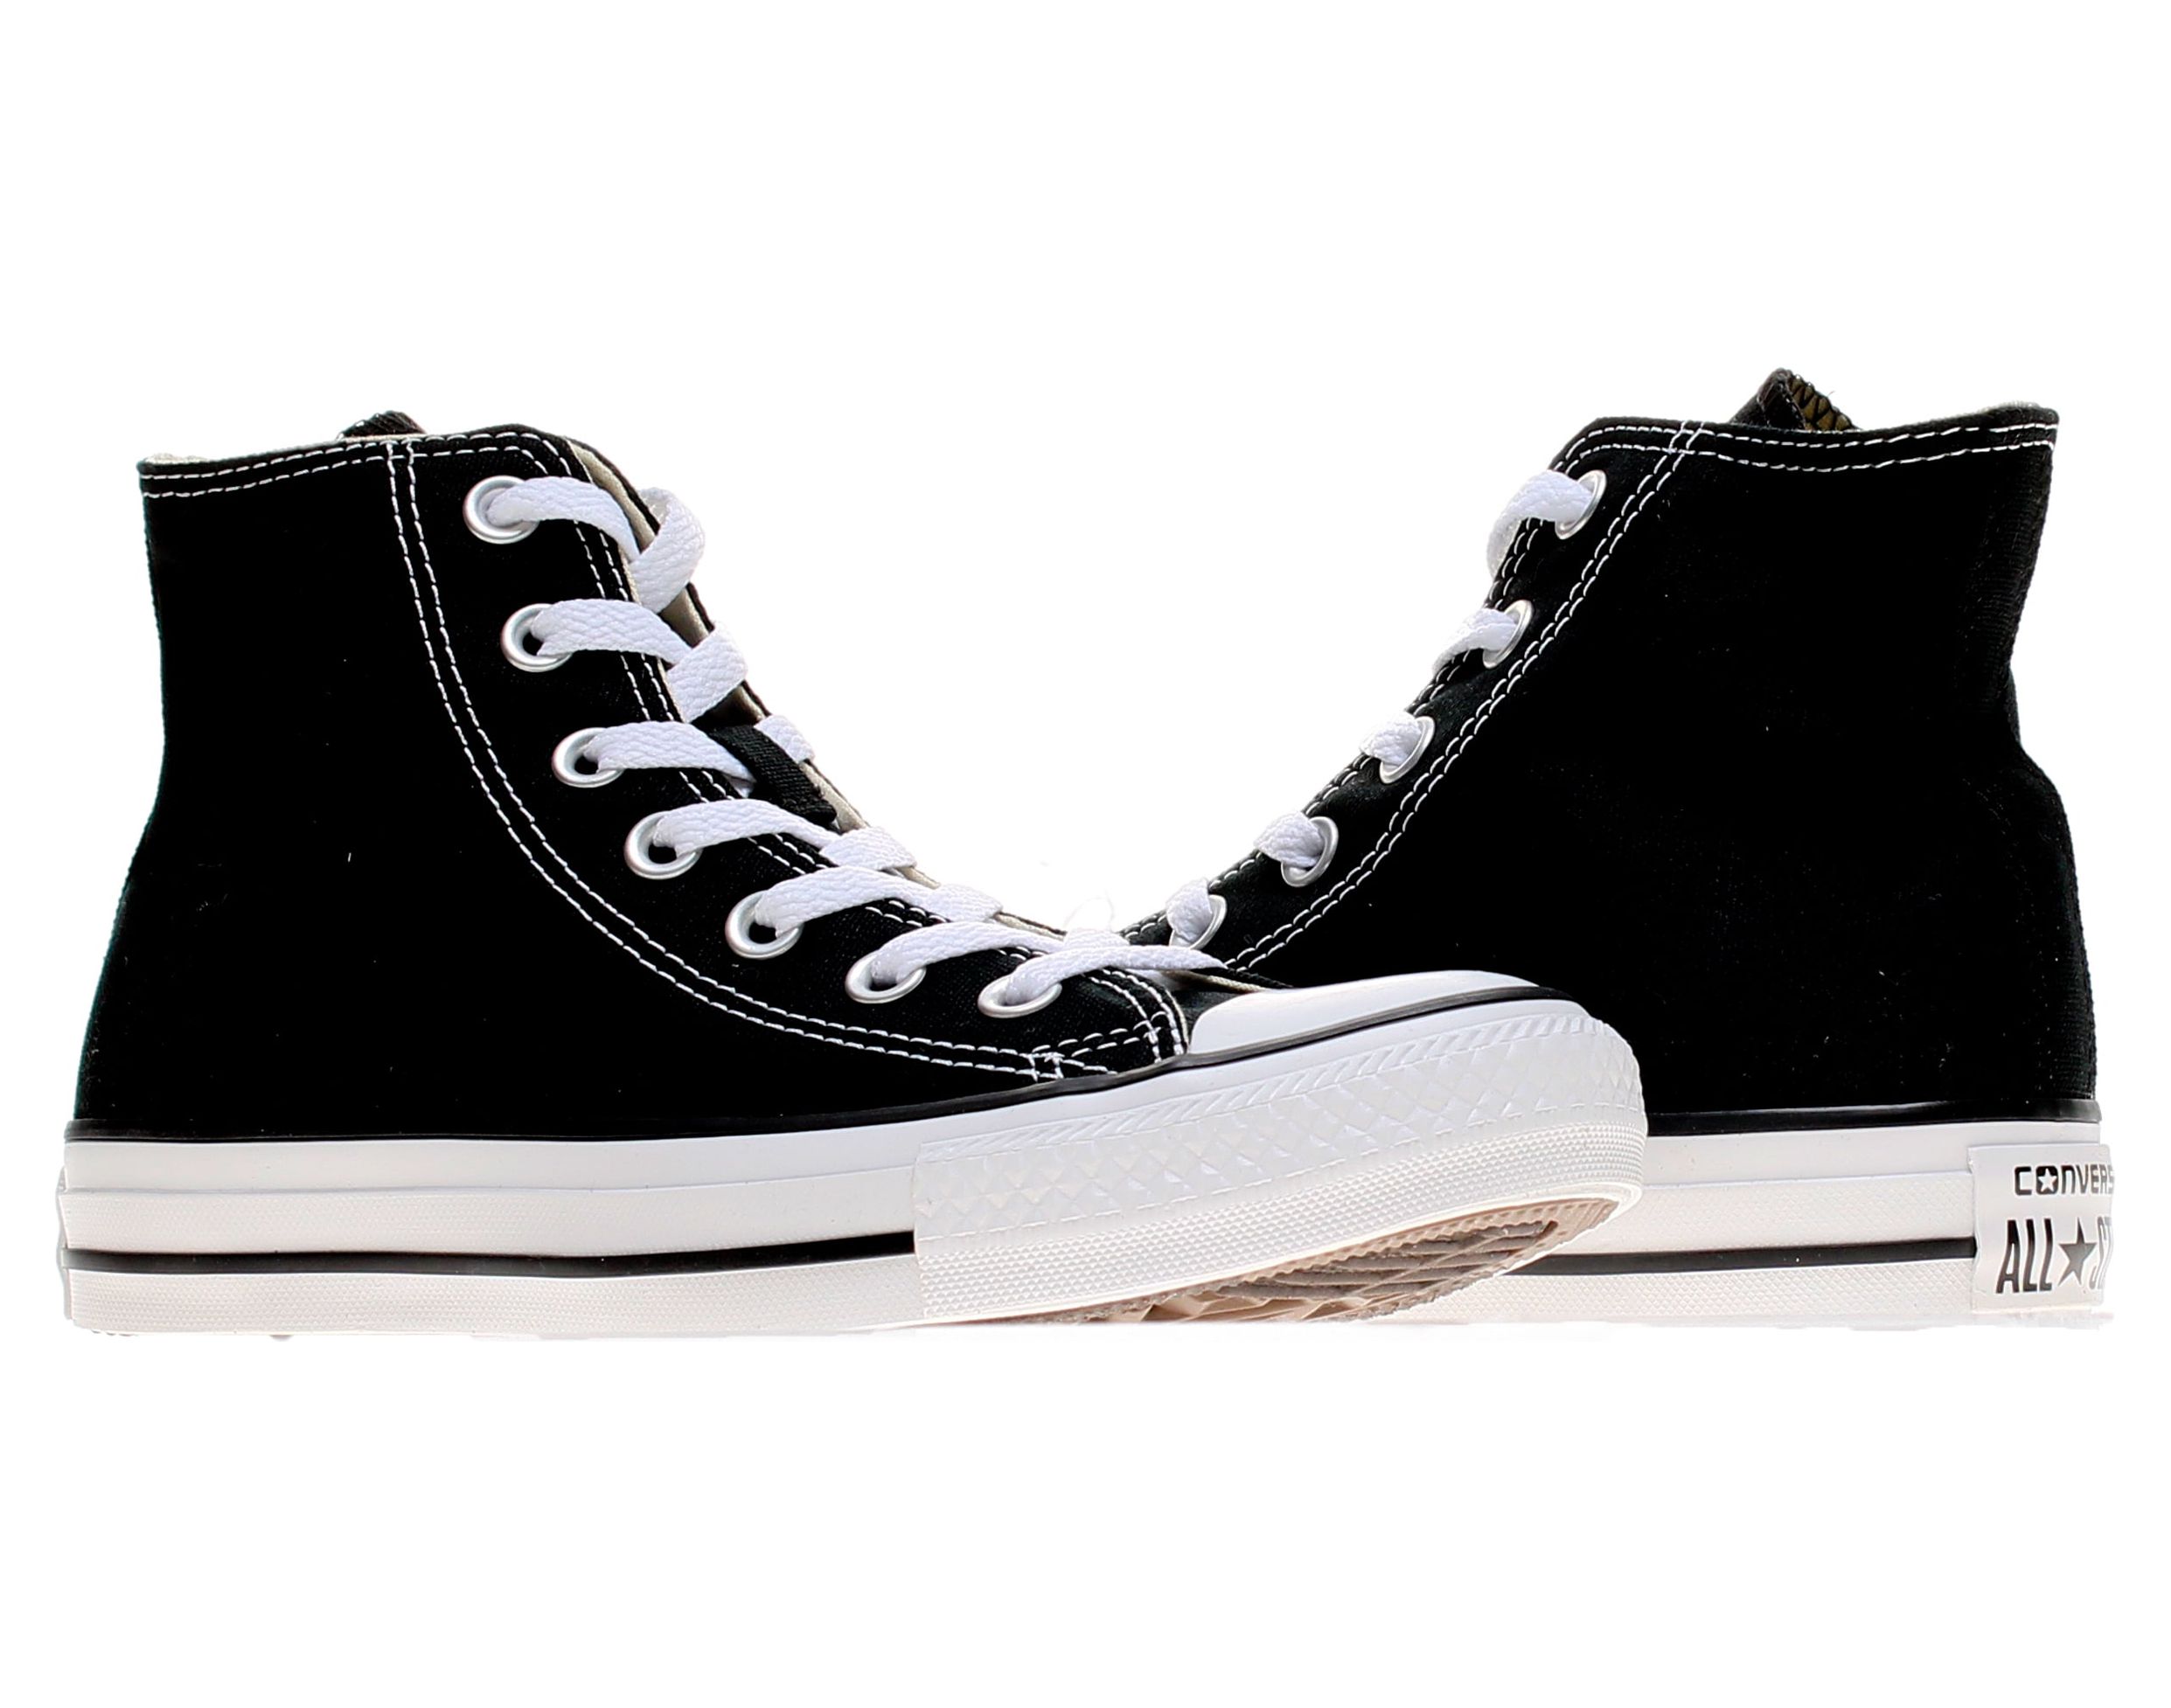 Converse M9160: Chuck Taylor All Star High Top Unisex Black White Sneakers (6 US Men 8 US Women 6 UK 39 EU, Black White) - image 1 of 6